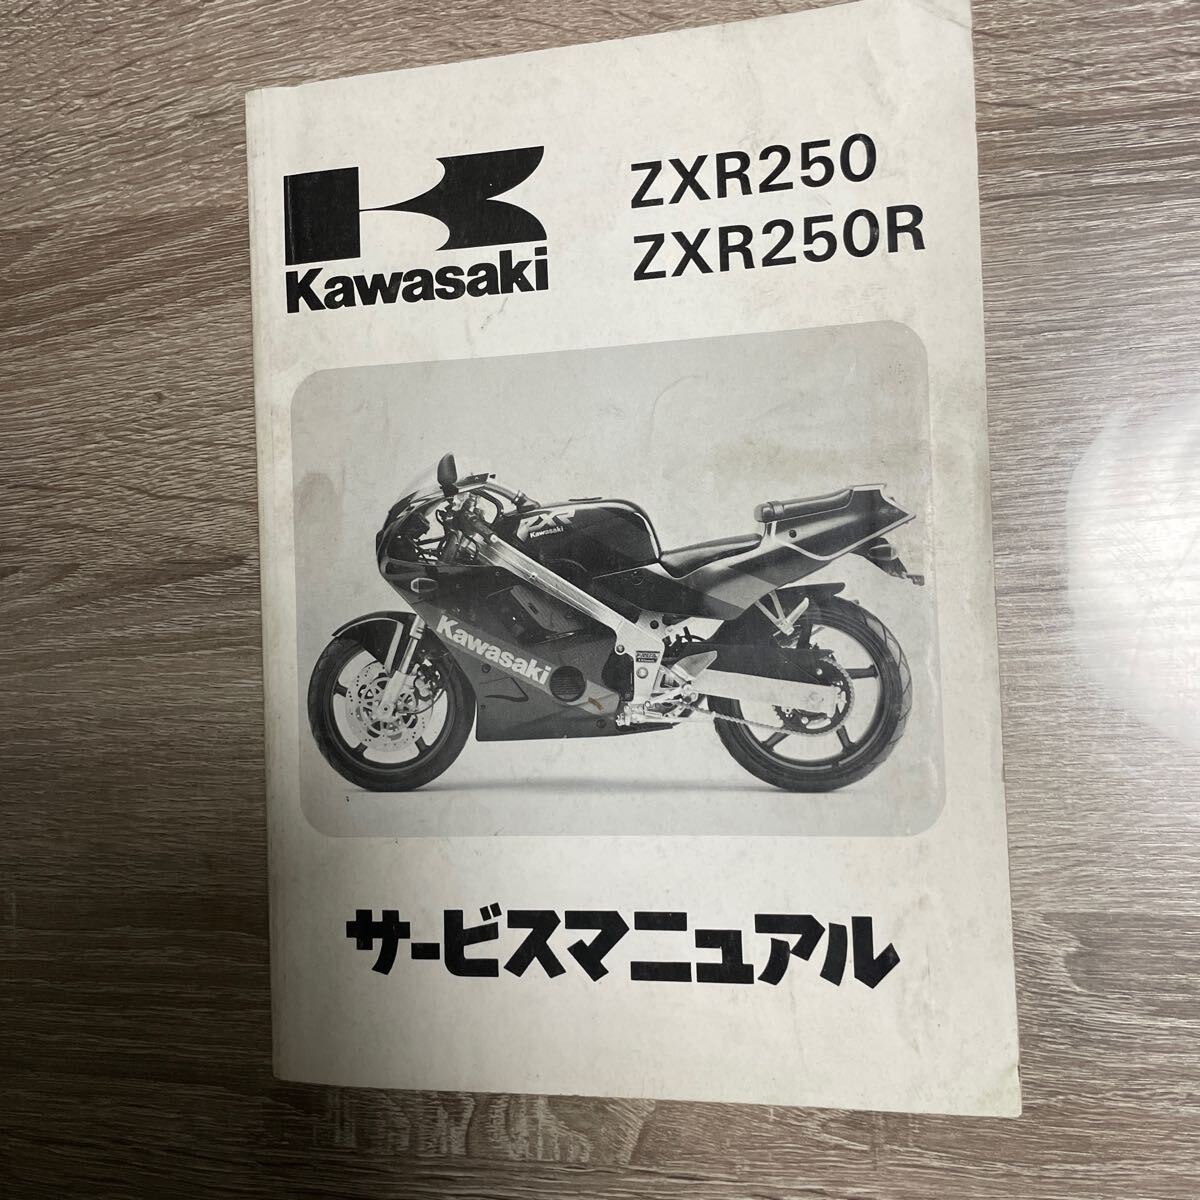  Kawasaki ZXR250 ZXR250R руководство по обслуживанию 